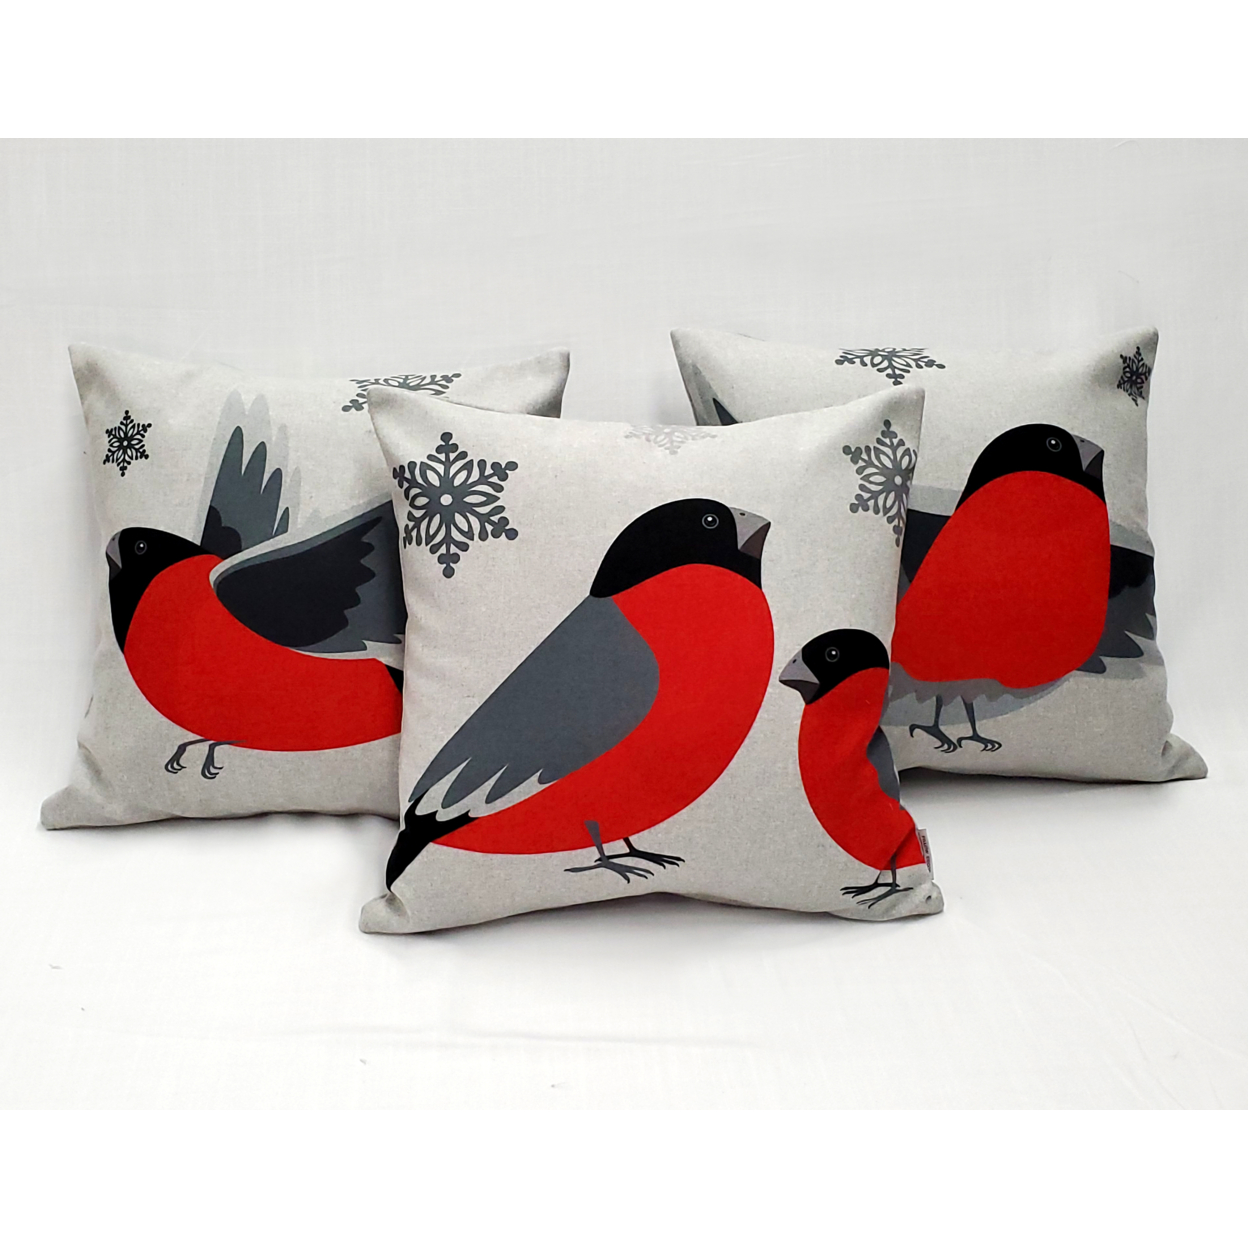 Winter Finch Flying Bird Christmas Pillow, With Polyfill Insert